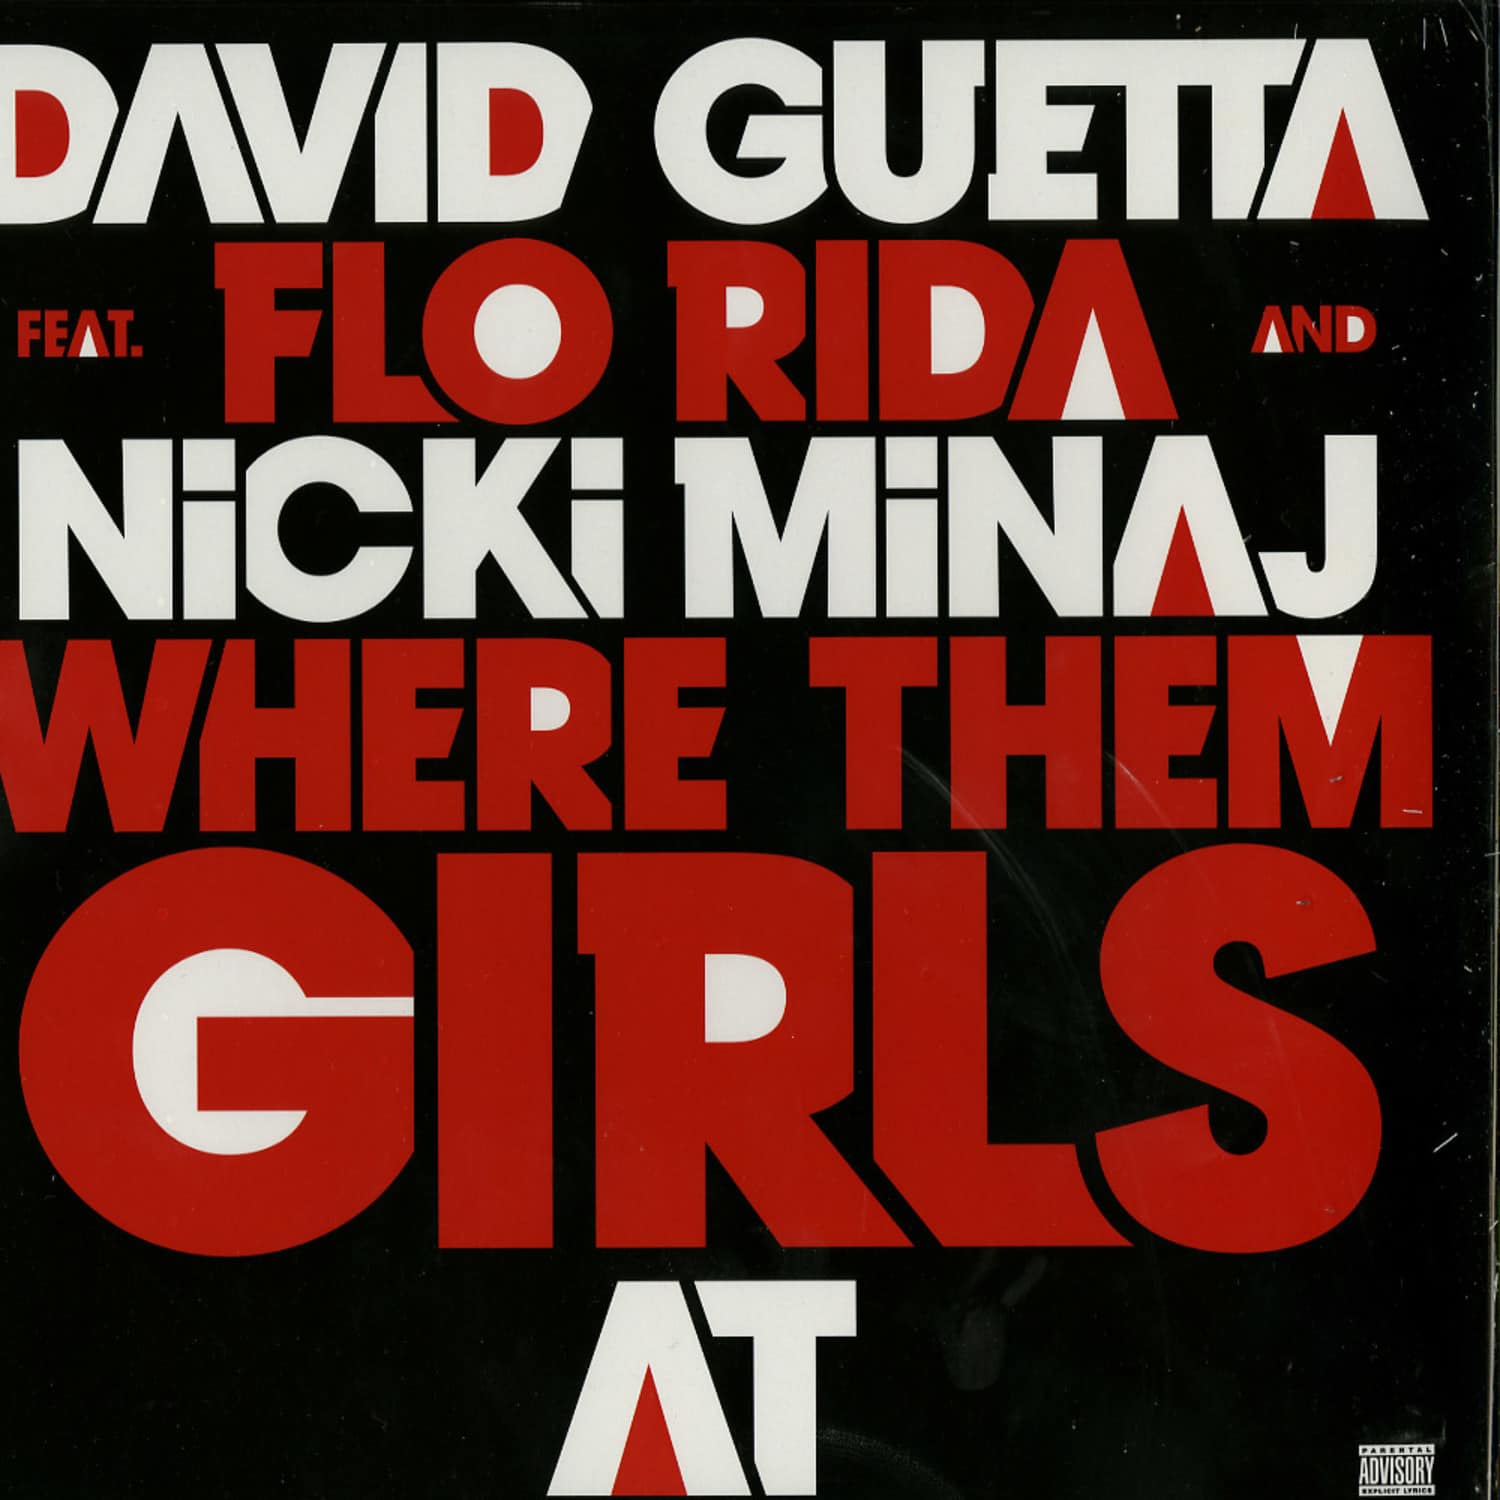 David Guetta ft. Flo Rida and Nicki Minaj - WHERE THEM GIRLS AT